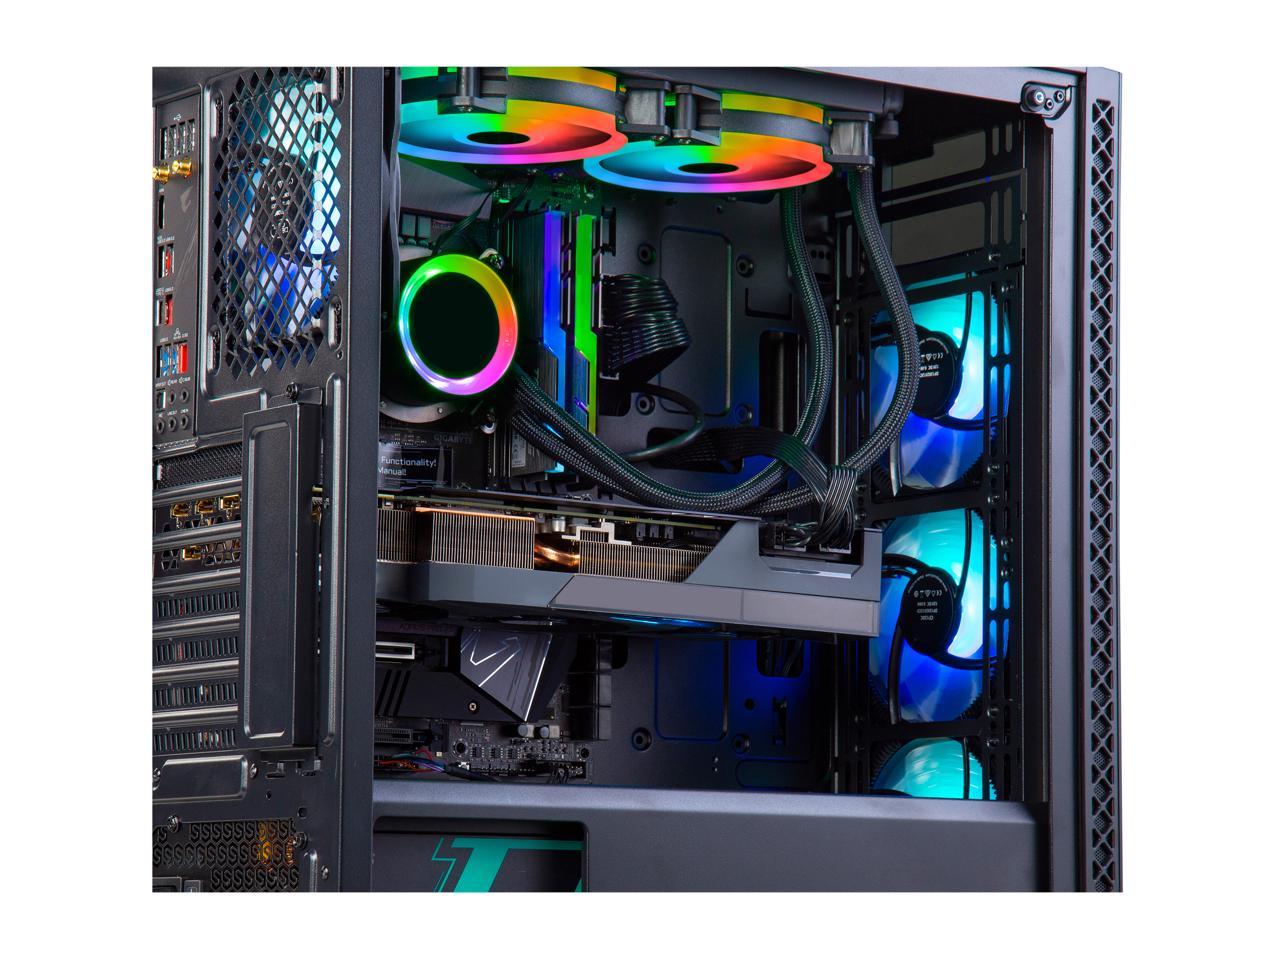 ABS Legend Gaming PC - Intel i9-10900KF - GeForce RTX 3090 - G.Skill TridentZ RGB 32GB DDR4 3200 MHz - 1TB M.2 NVMe SSD